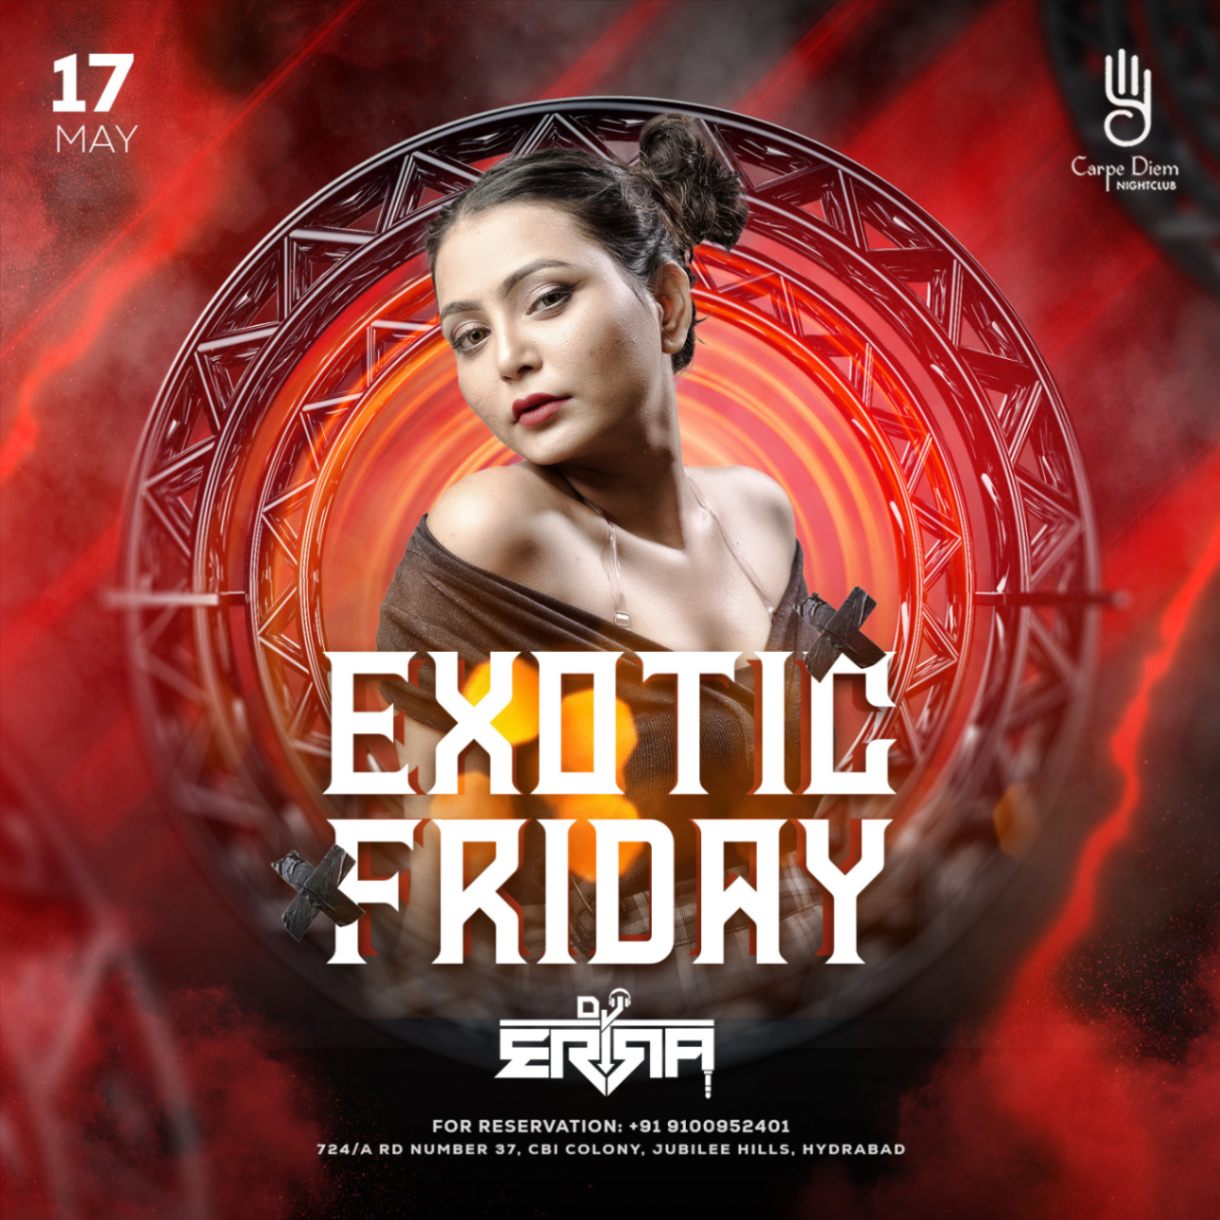 Exotic Friday - ft DJ Erra